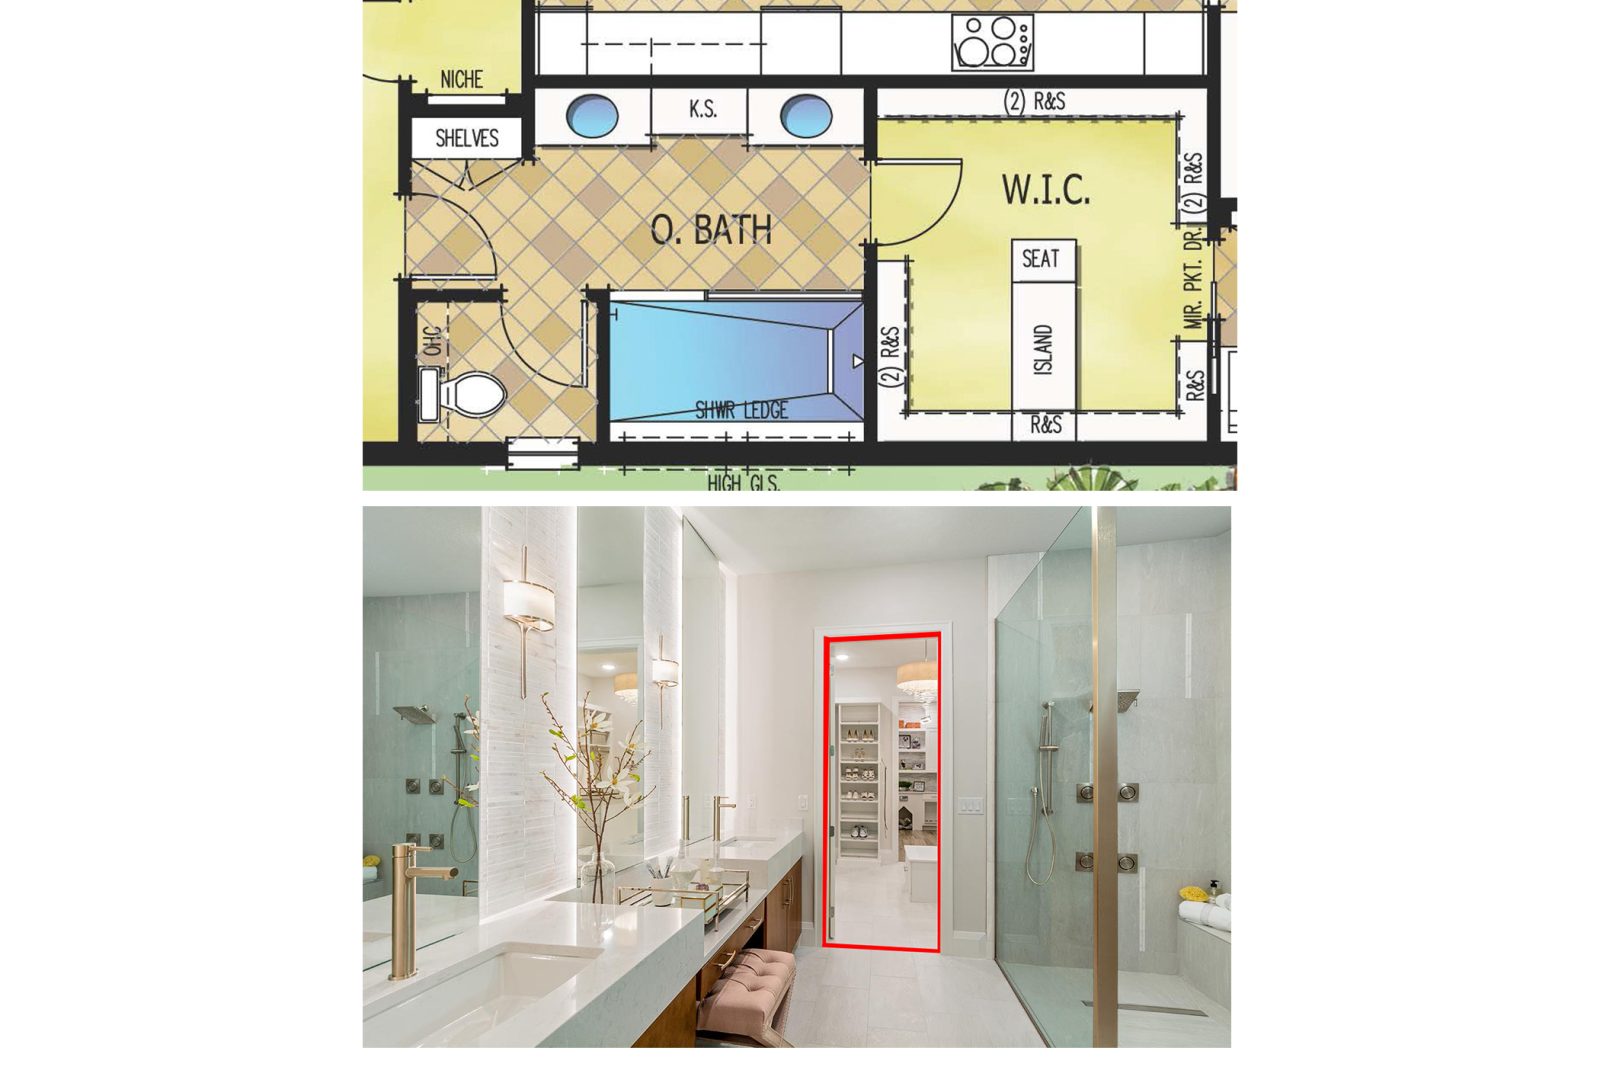 Appliance Placement - Housing Design Matters